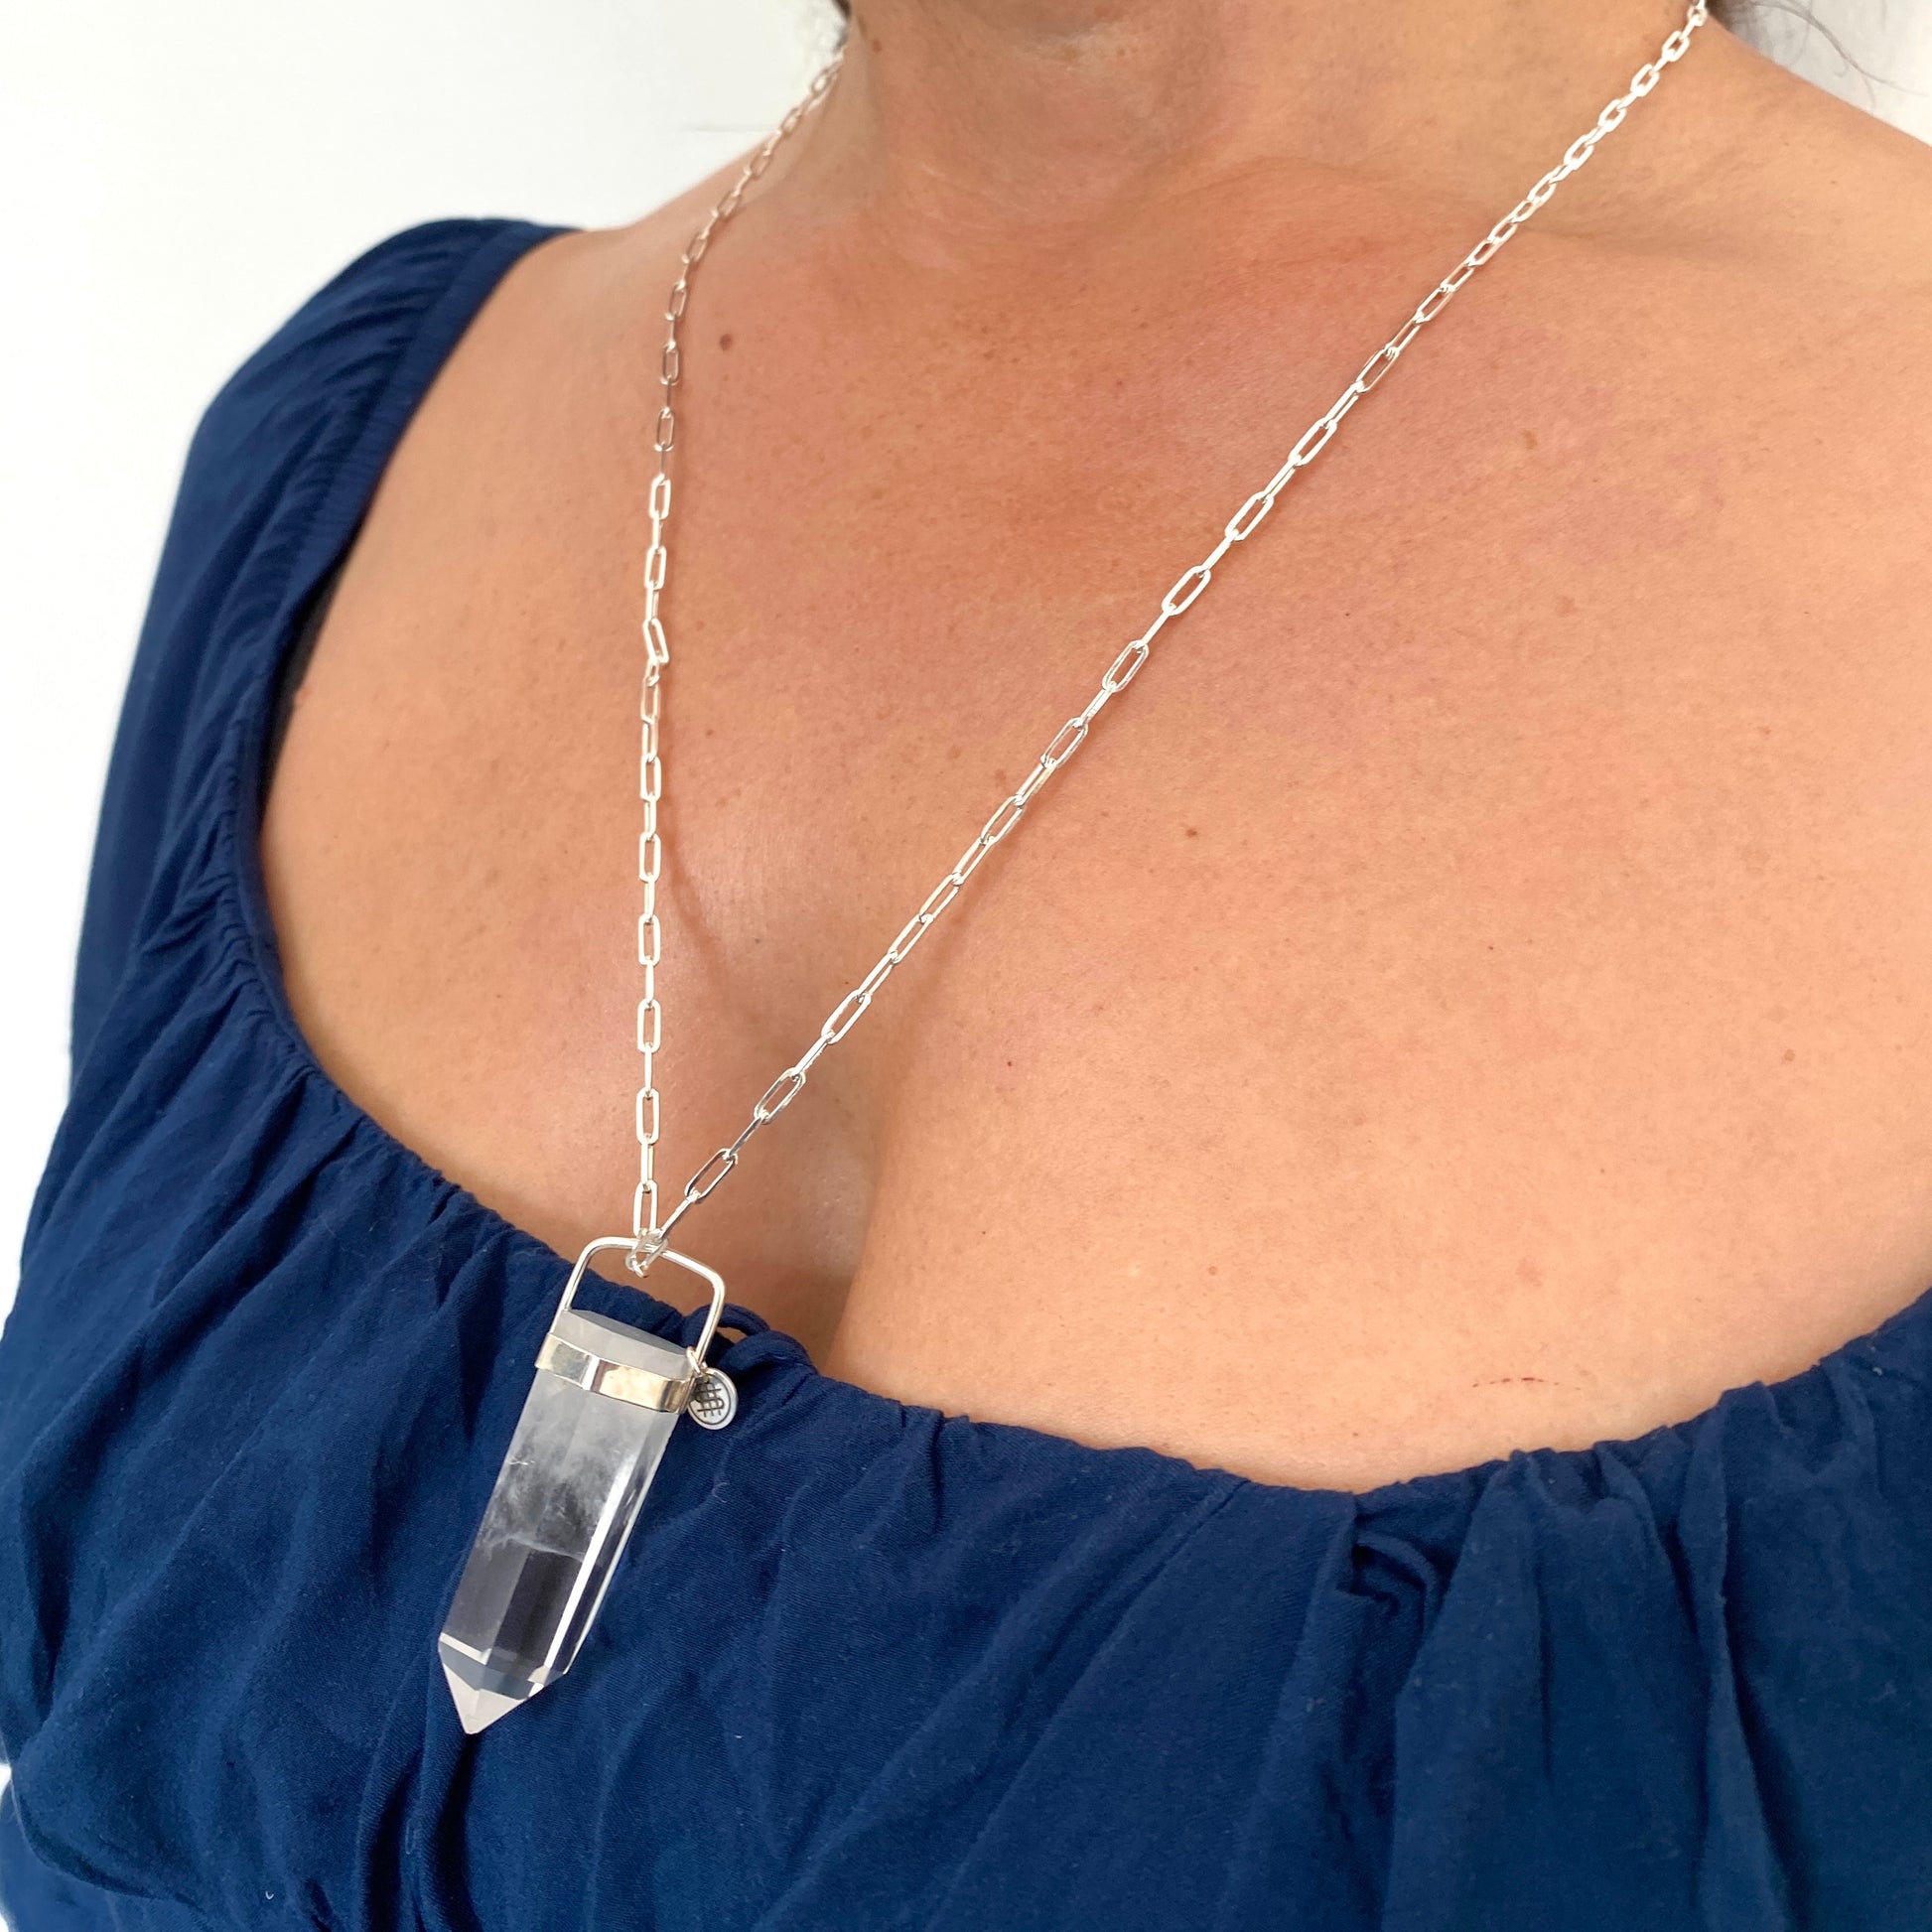 Clear quartz sterling silver chain pendant necklace. 24" necklace.